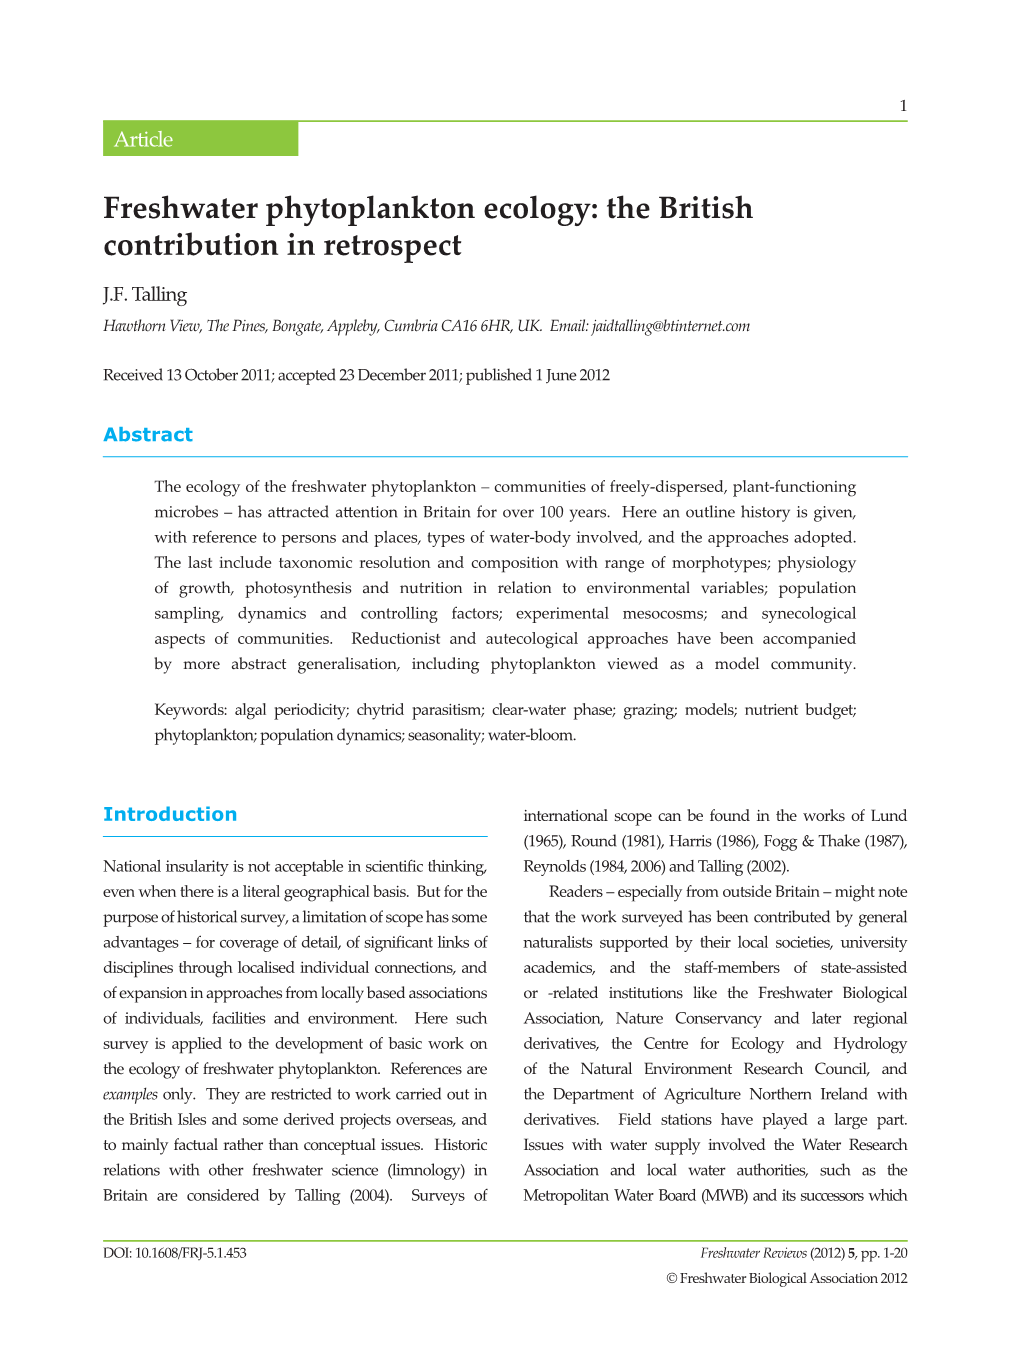 Freshwater Phytoplankton Ecology: the British Contribution in Retrospect